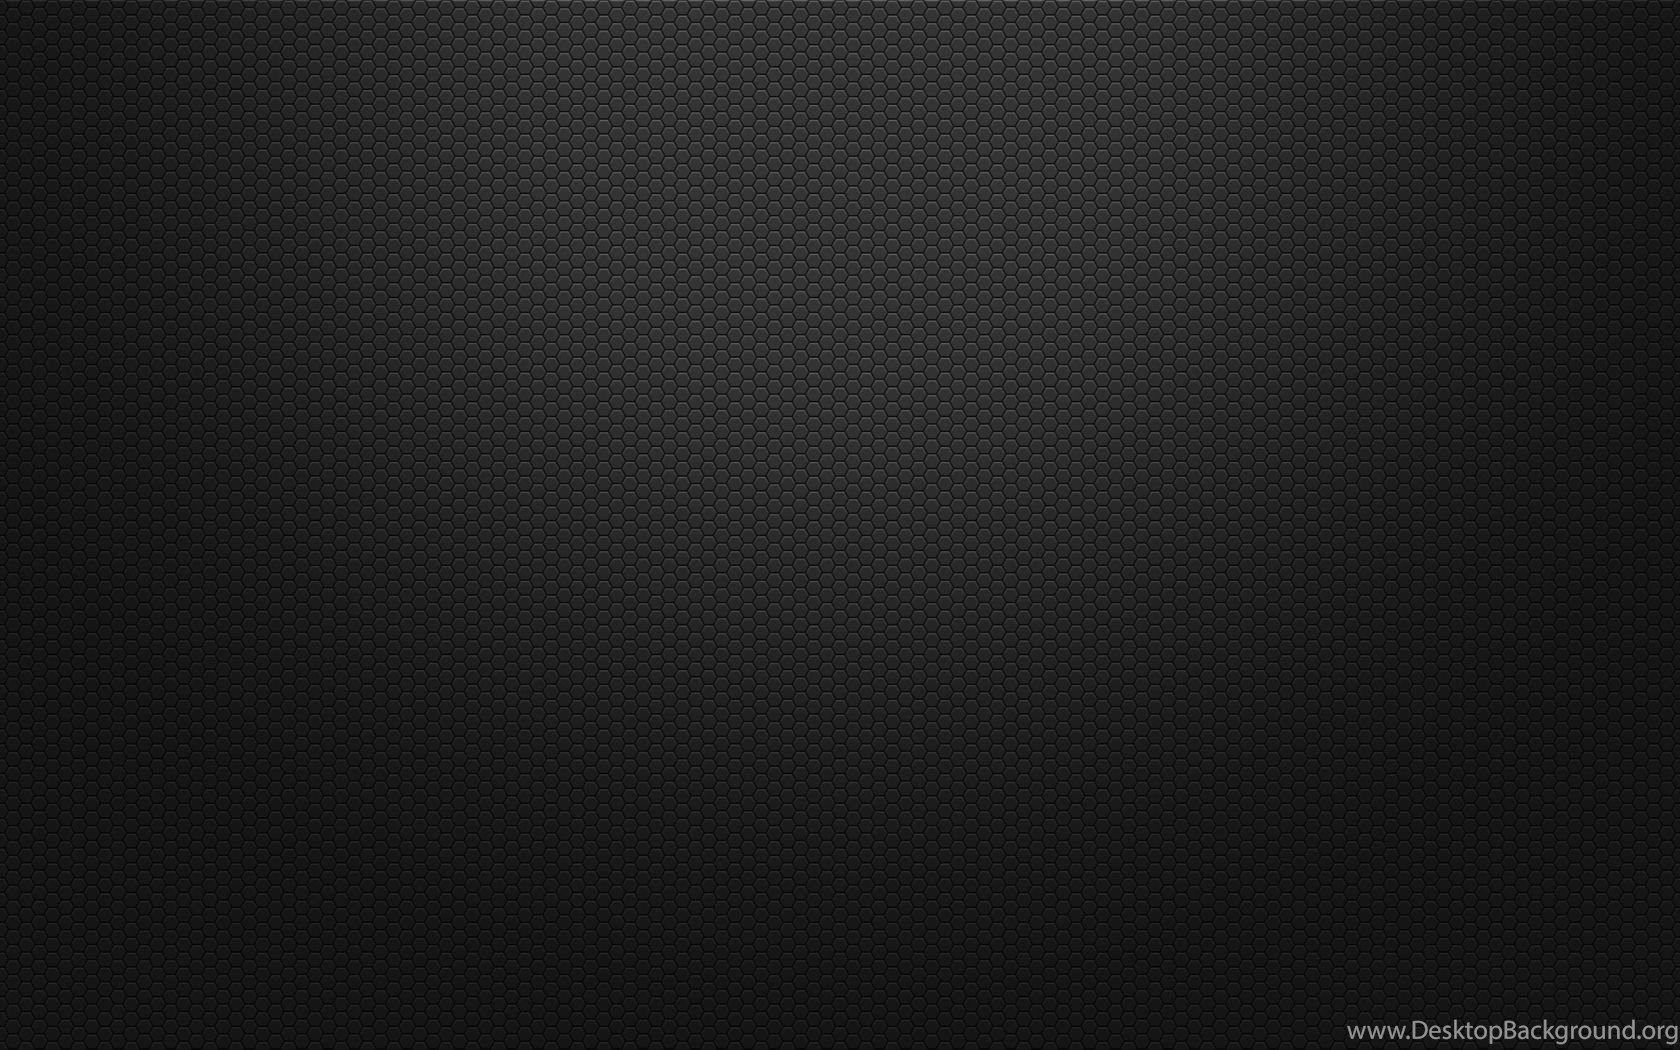 Plain Black HD Wallpapers - Top Free Plain Black HD Backgrounds ...